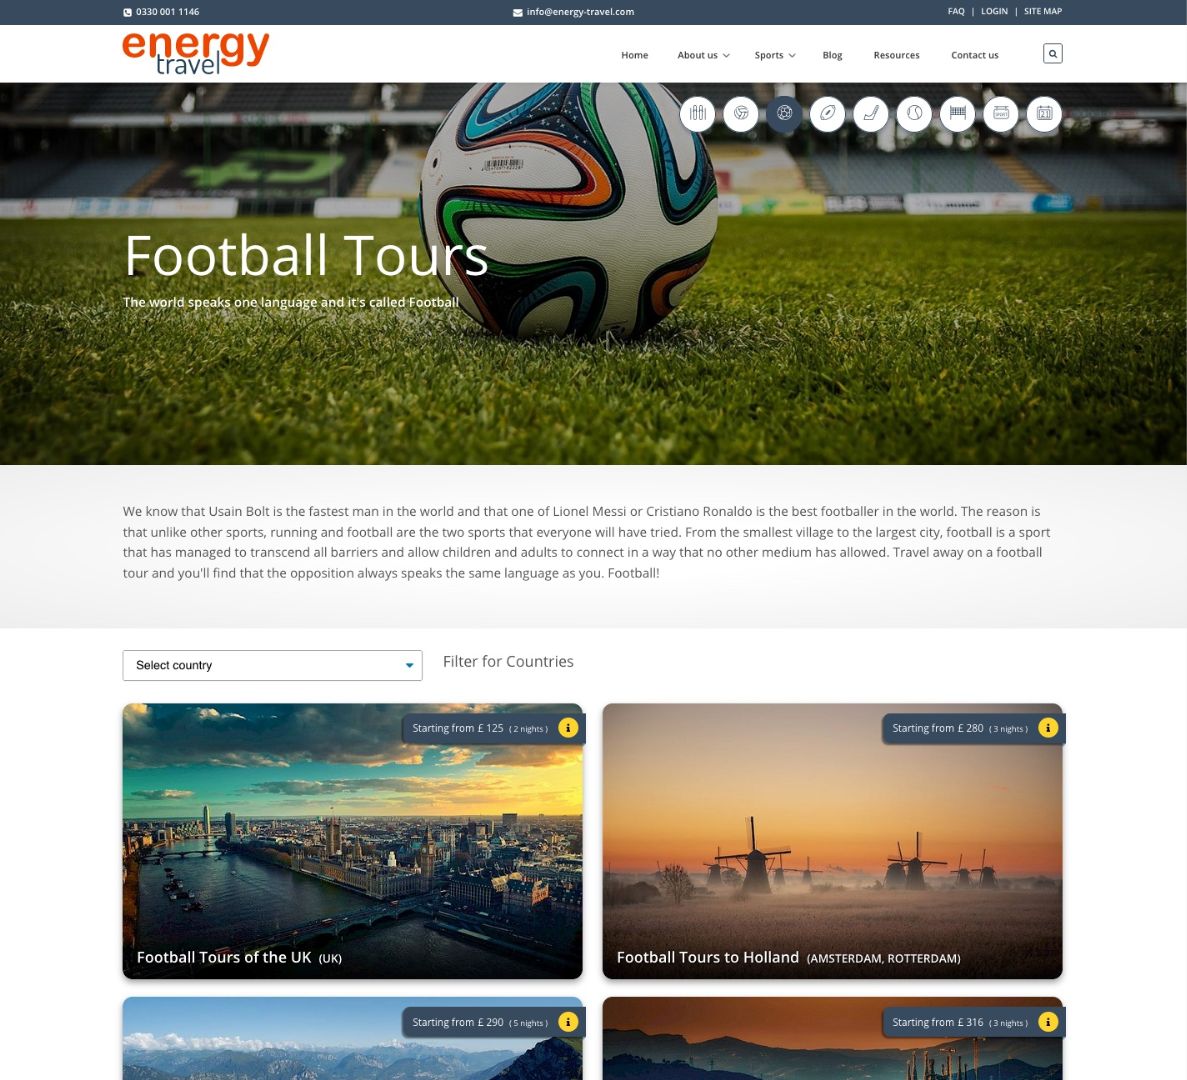 Gallery Energy Travel - Energy 05